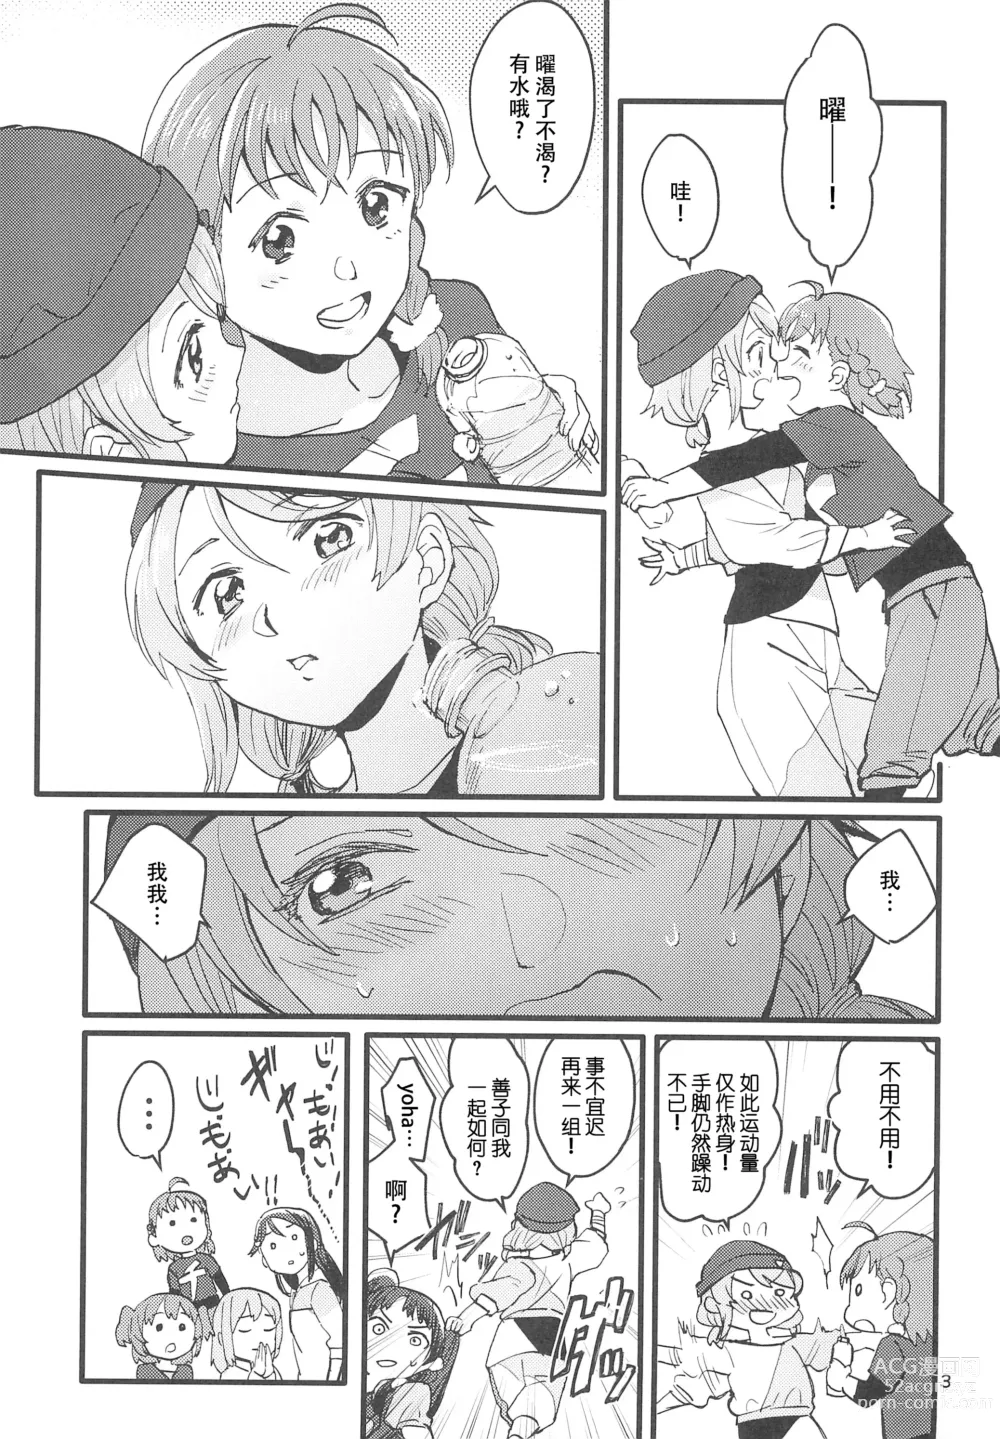 Page 6 of doujinshi 微热烈火